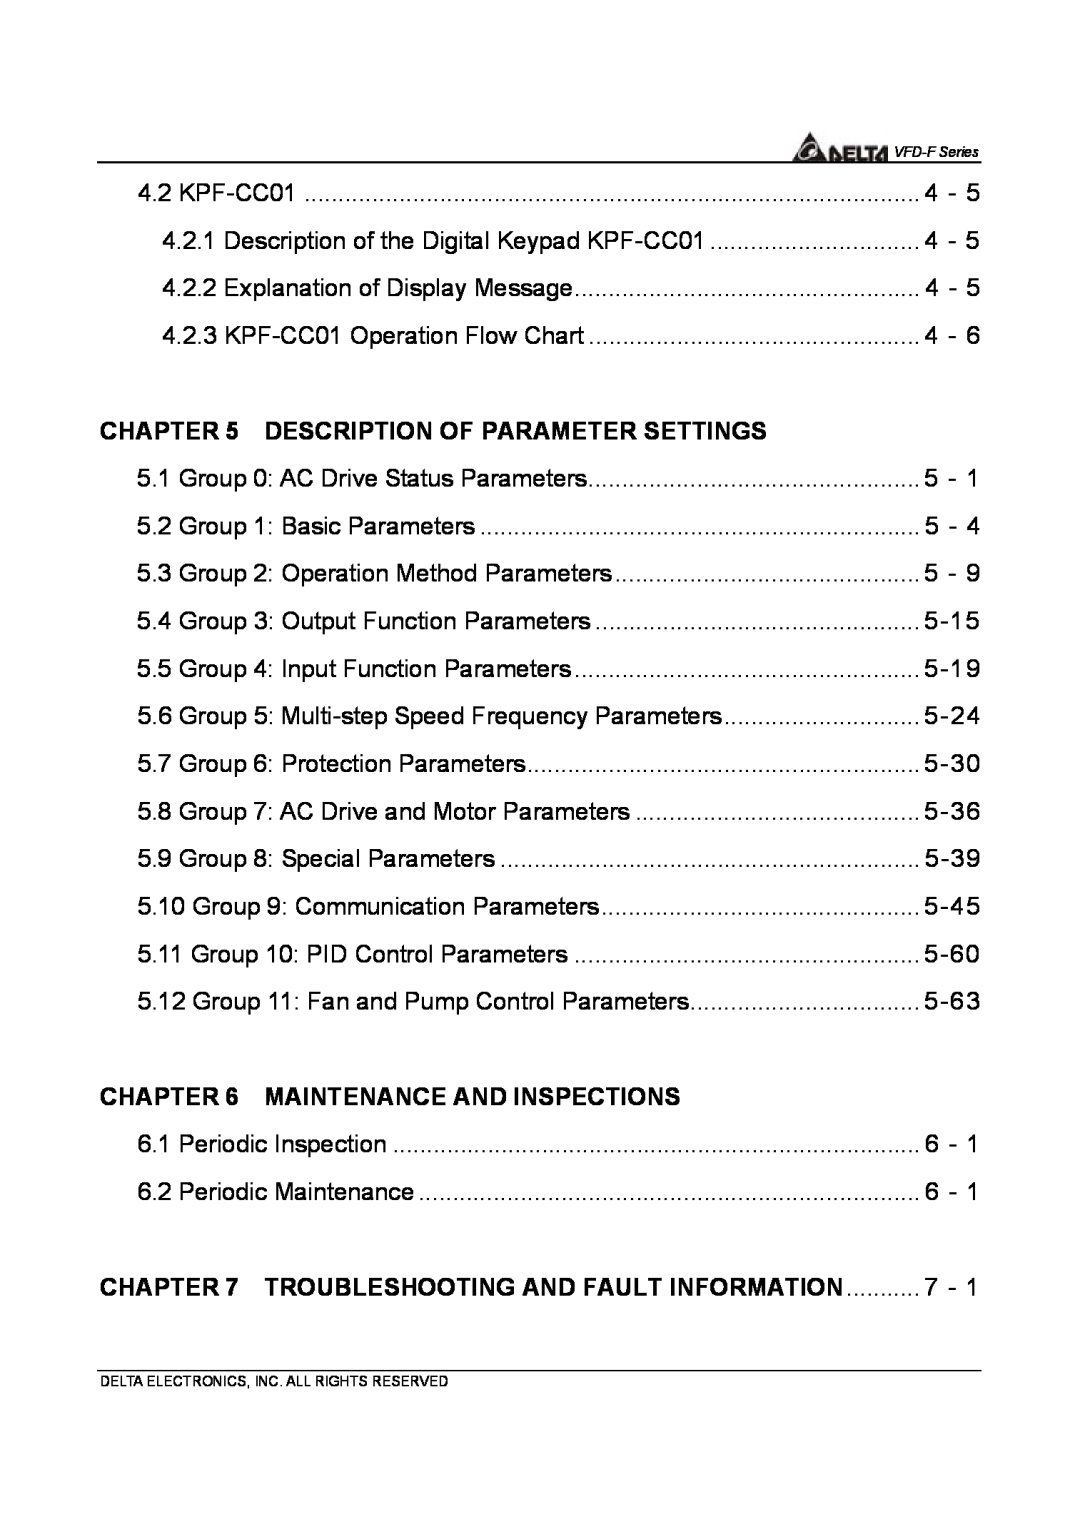 Delta Electronics VFD-F Series manual Description Of Parameter Settings, Maintenance And Inspections 